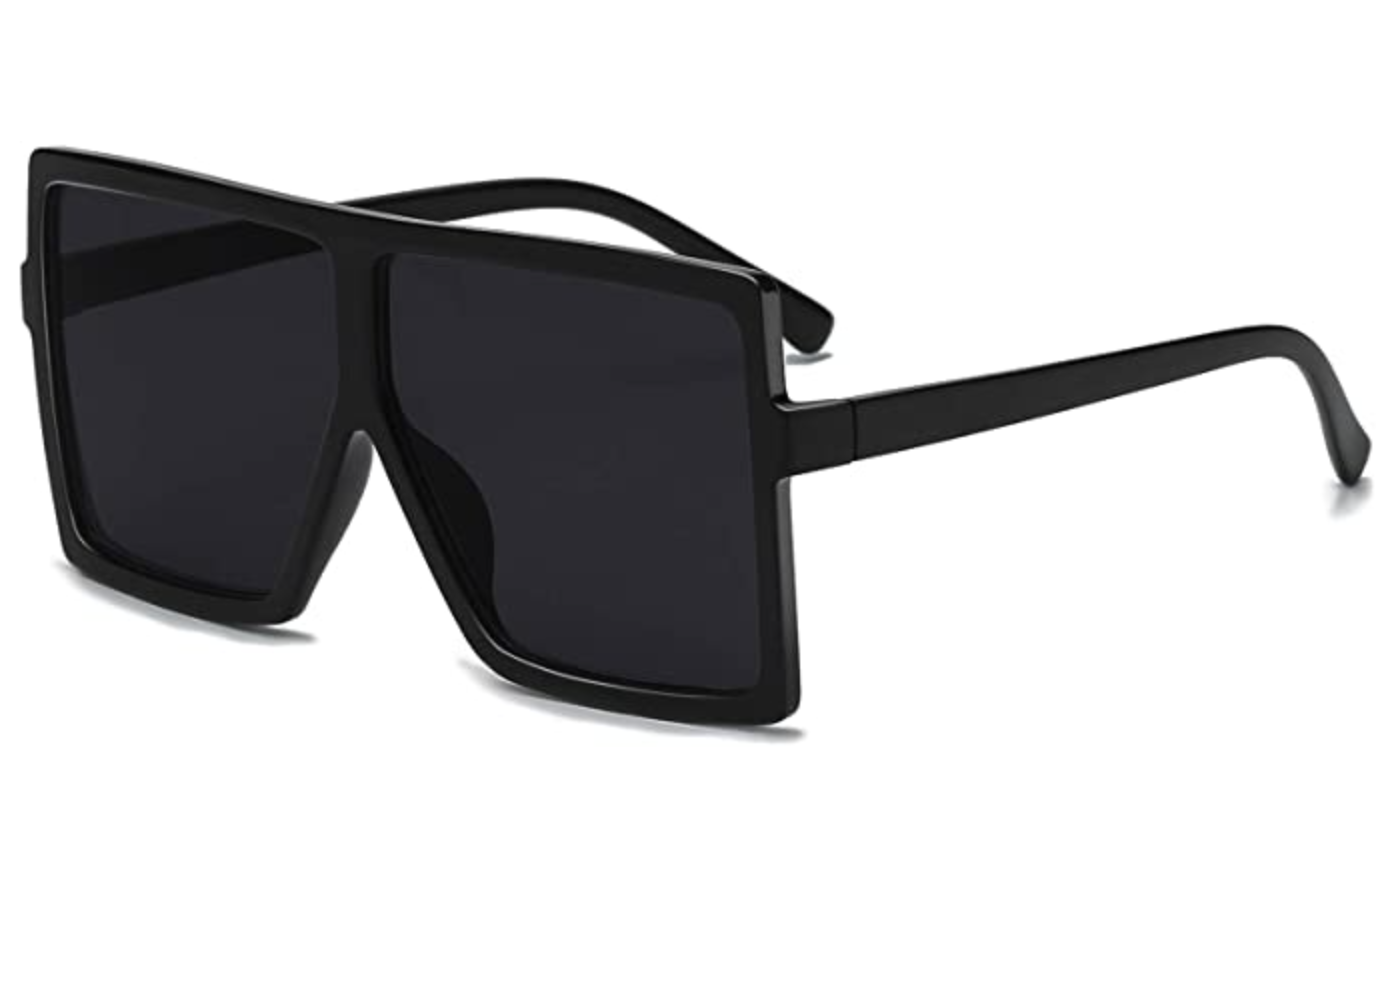 GRFISIA UV400 Rated Square Oversized Sunglasses